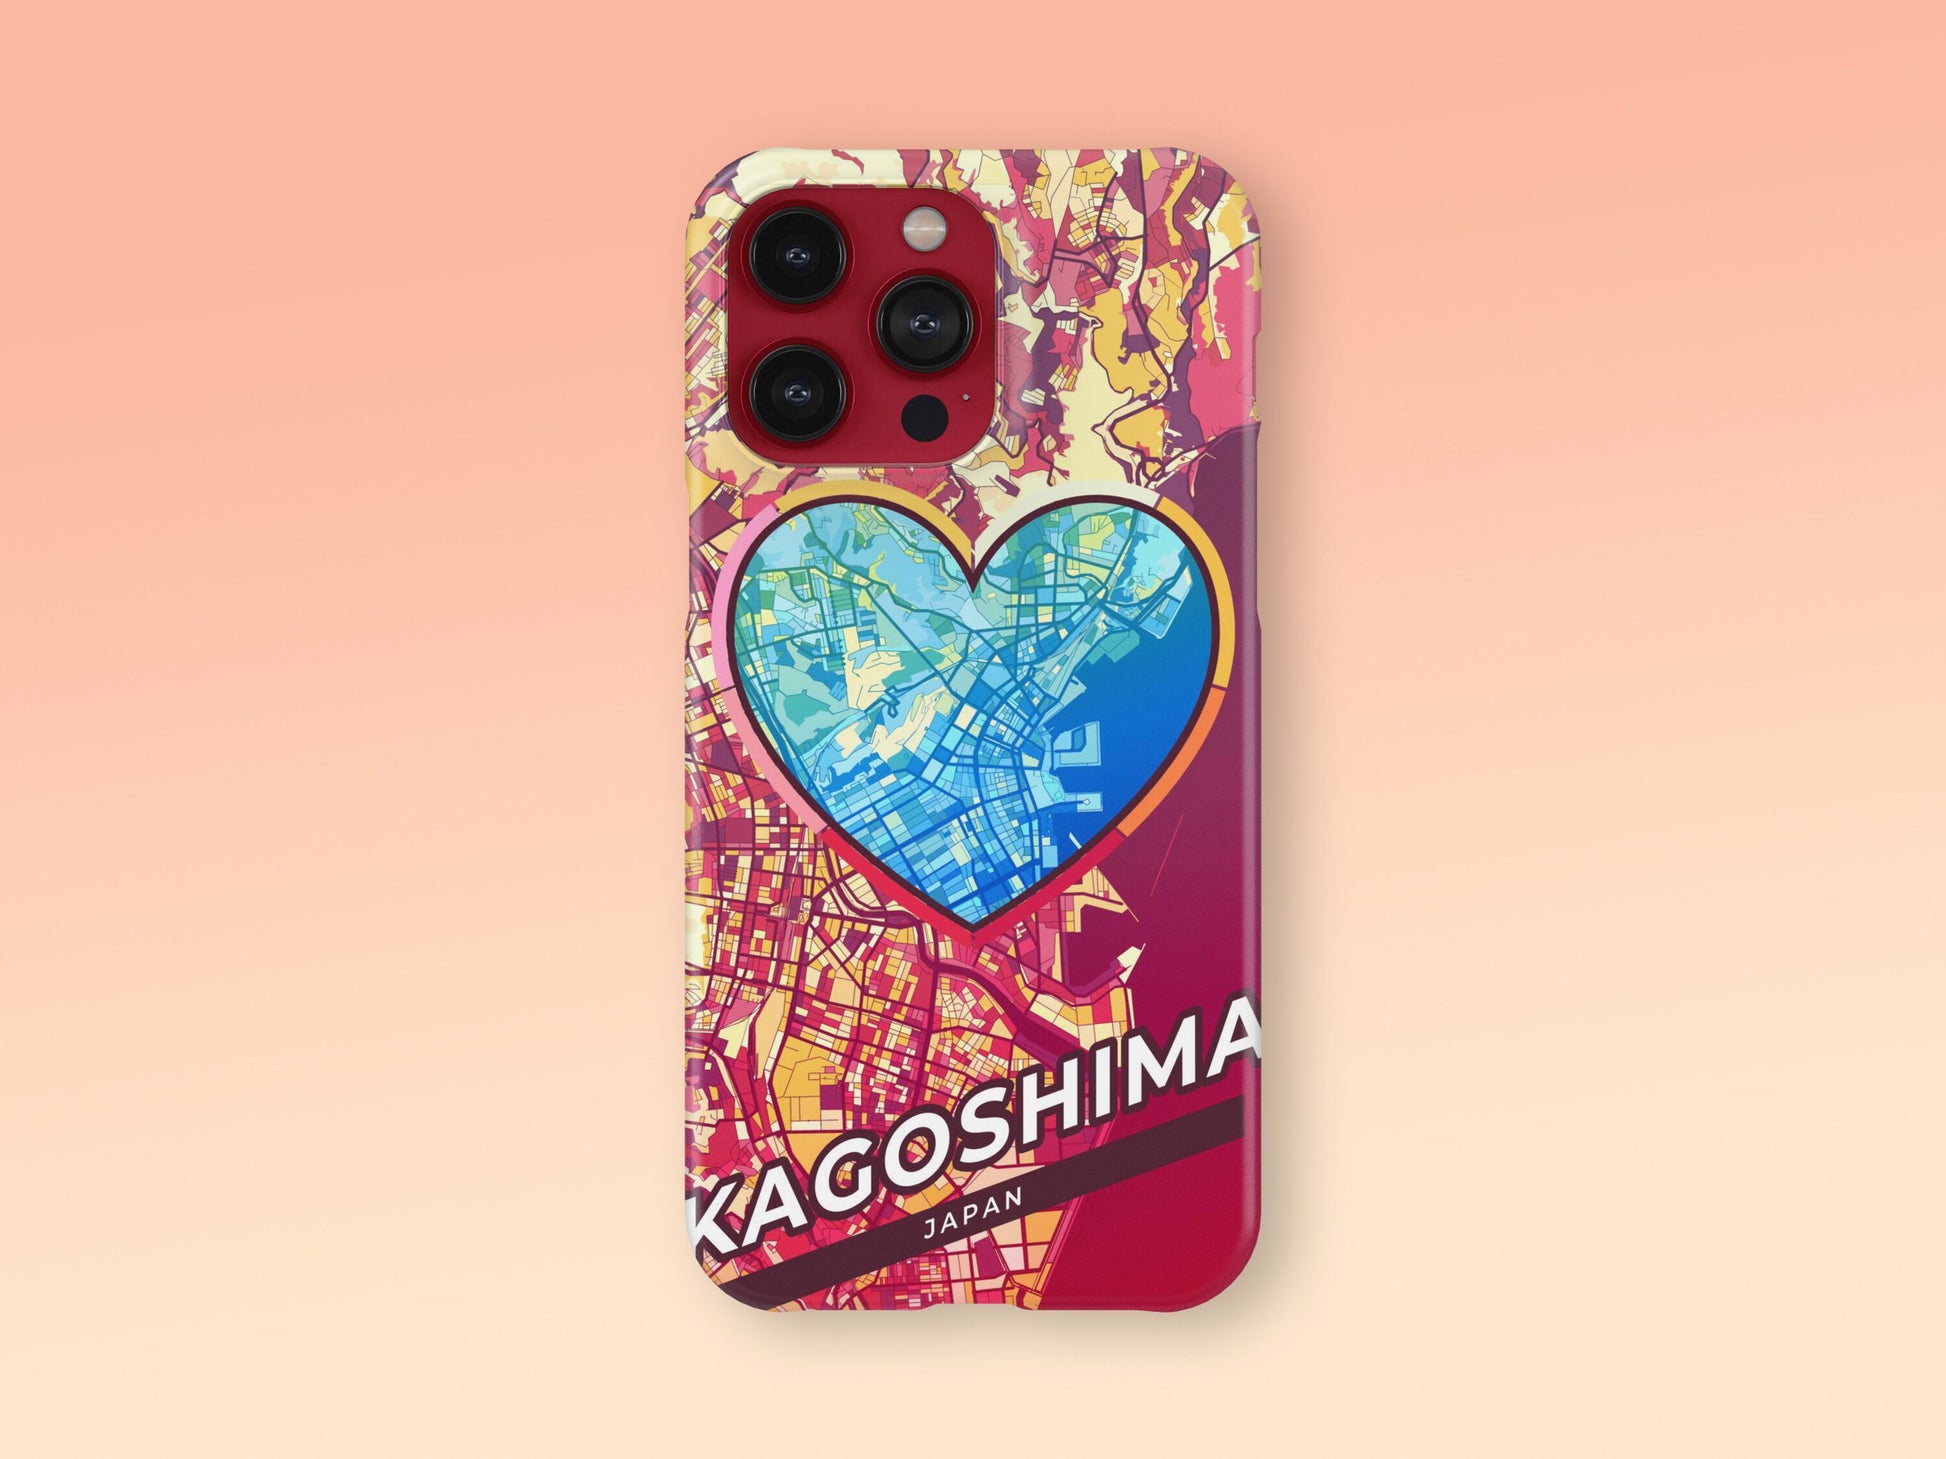 Kagoshima Japan slim phone case with colorful icon. Birthday, wedding or housewarming gift. Couple match cases. 2